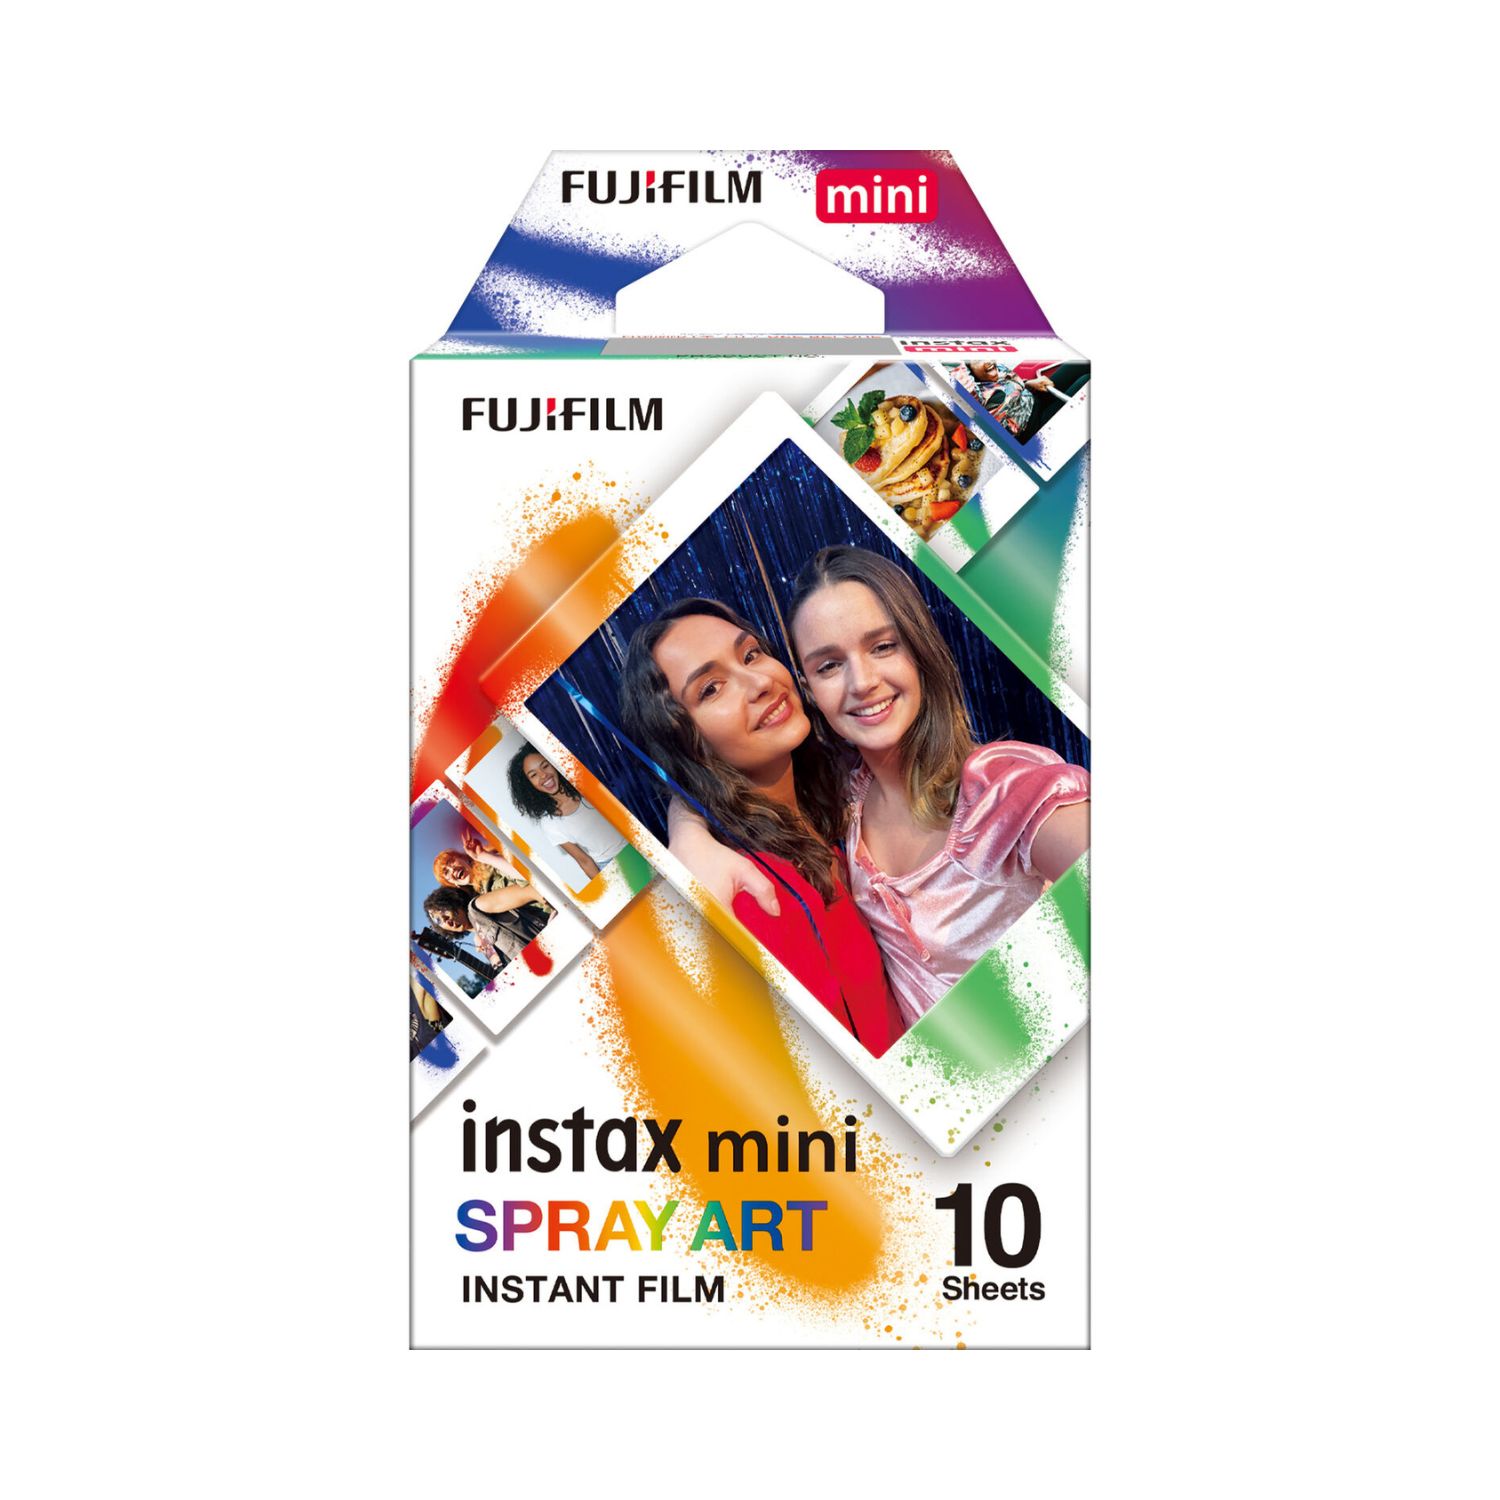 Buy Fujifilm Instax Mini 10 Sheet Online